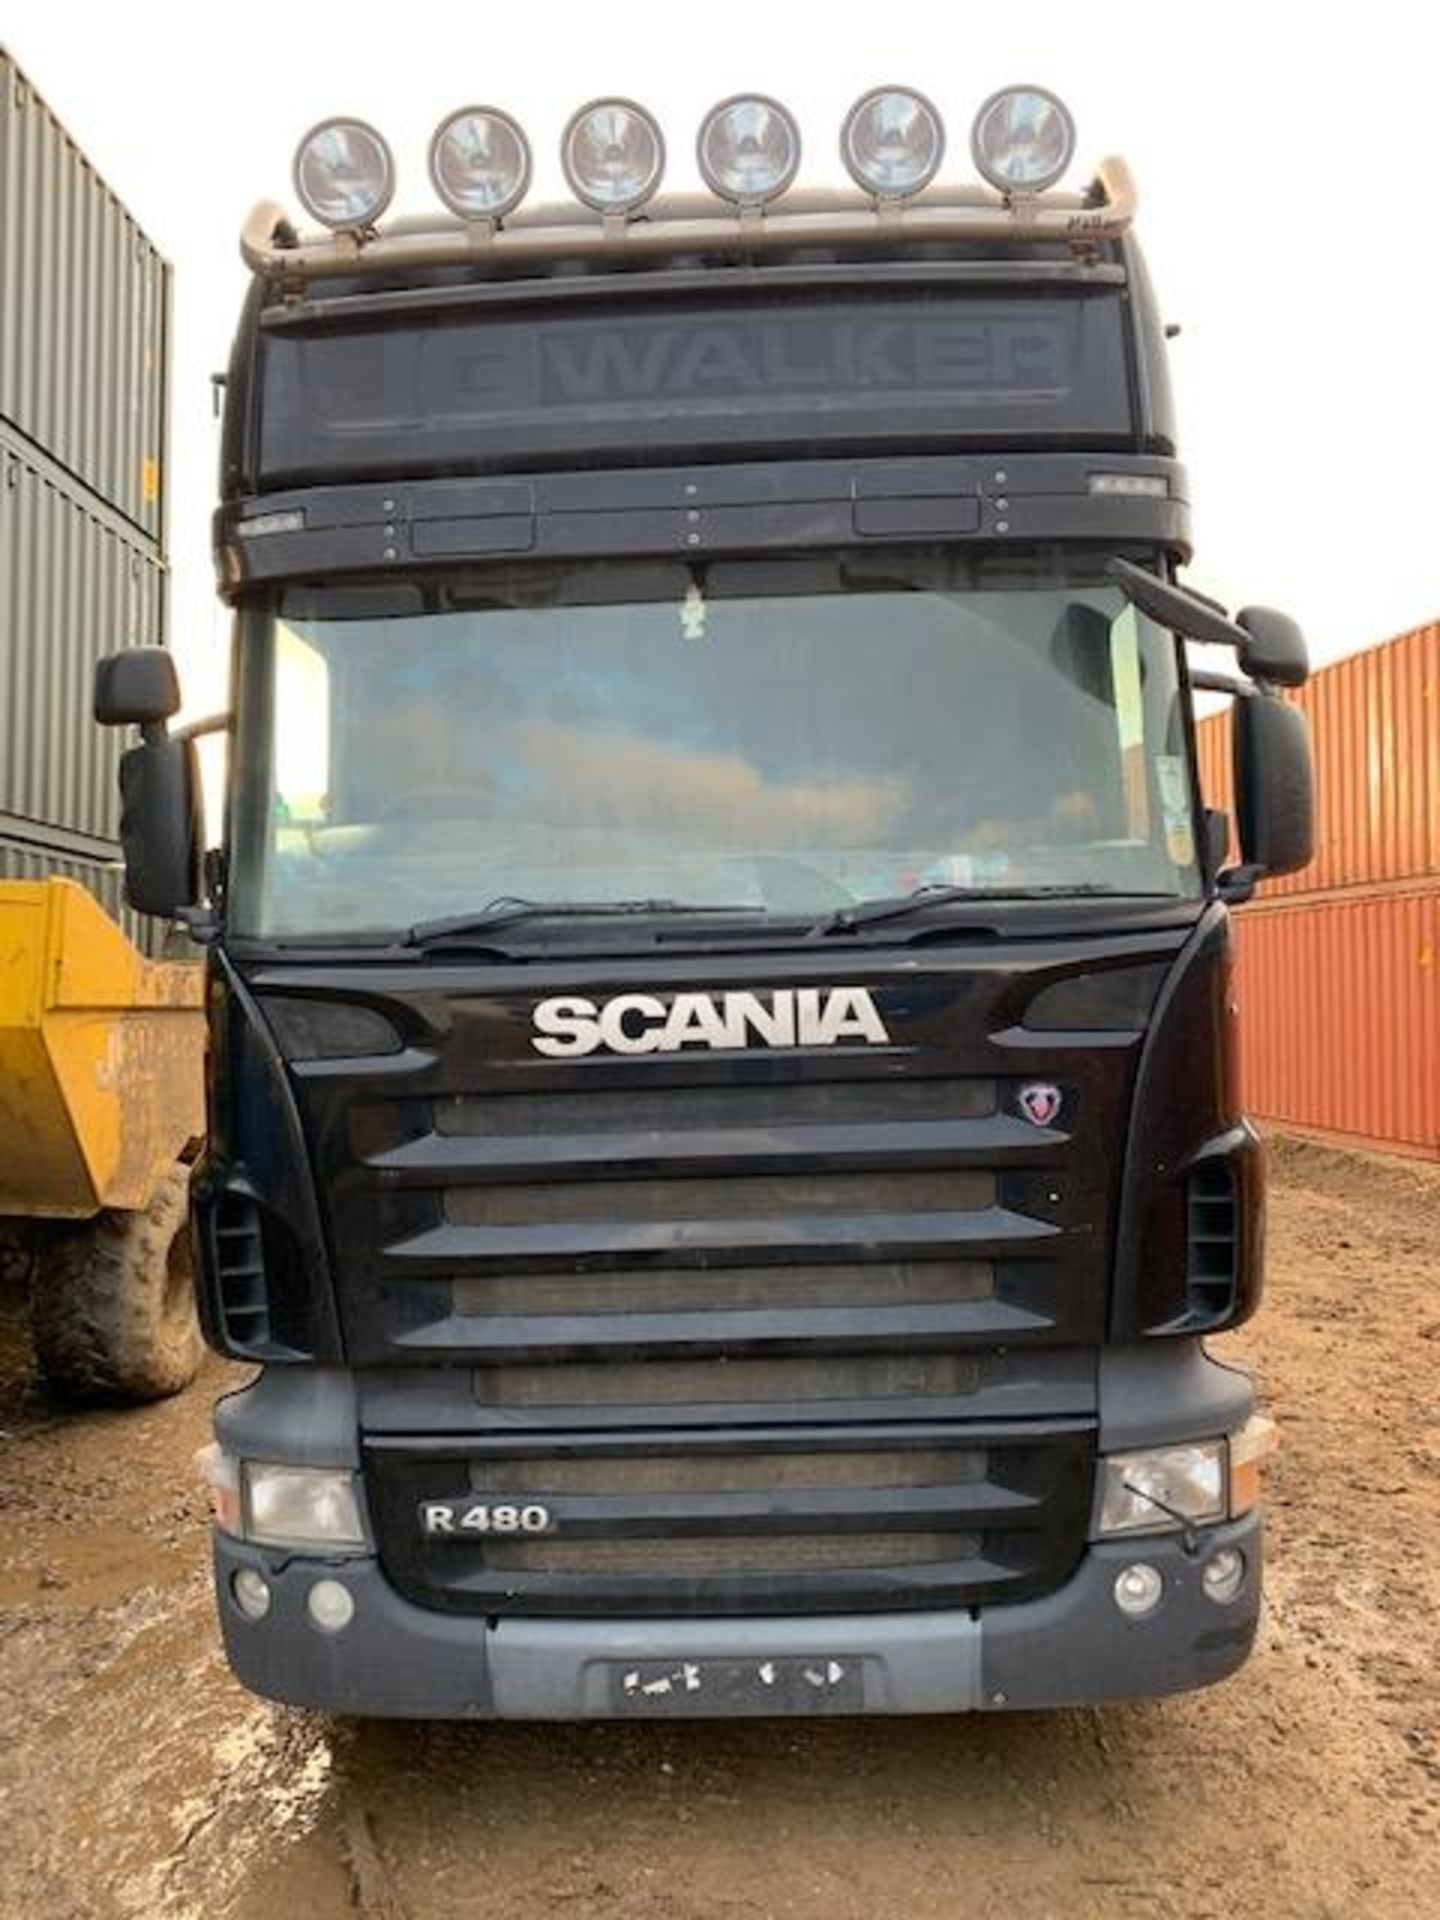 Scania 6x2 tractor unit, R480 Topline, 800,000 recrded kilometres, Registration number D19 JGW - Image 12 of 12